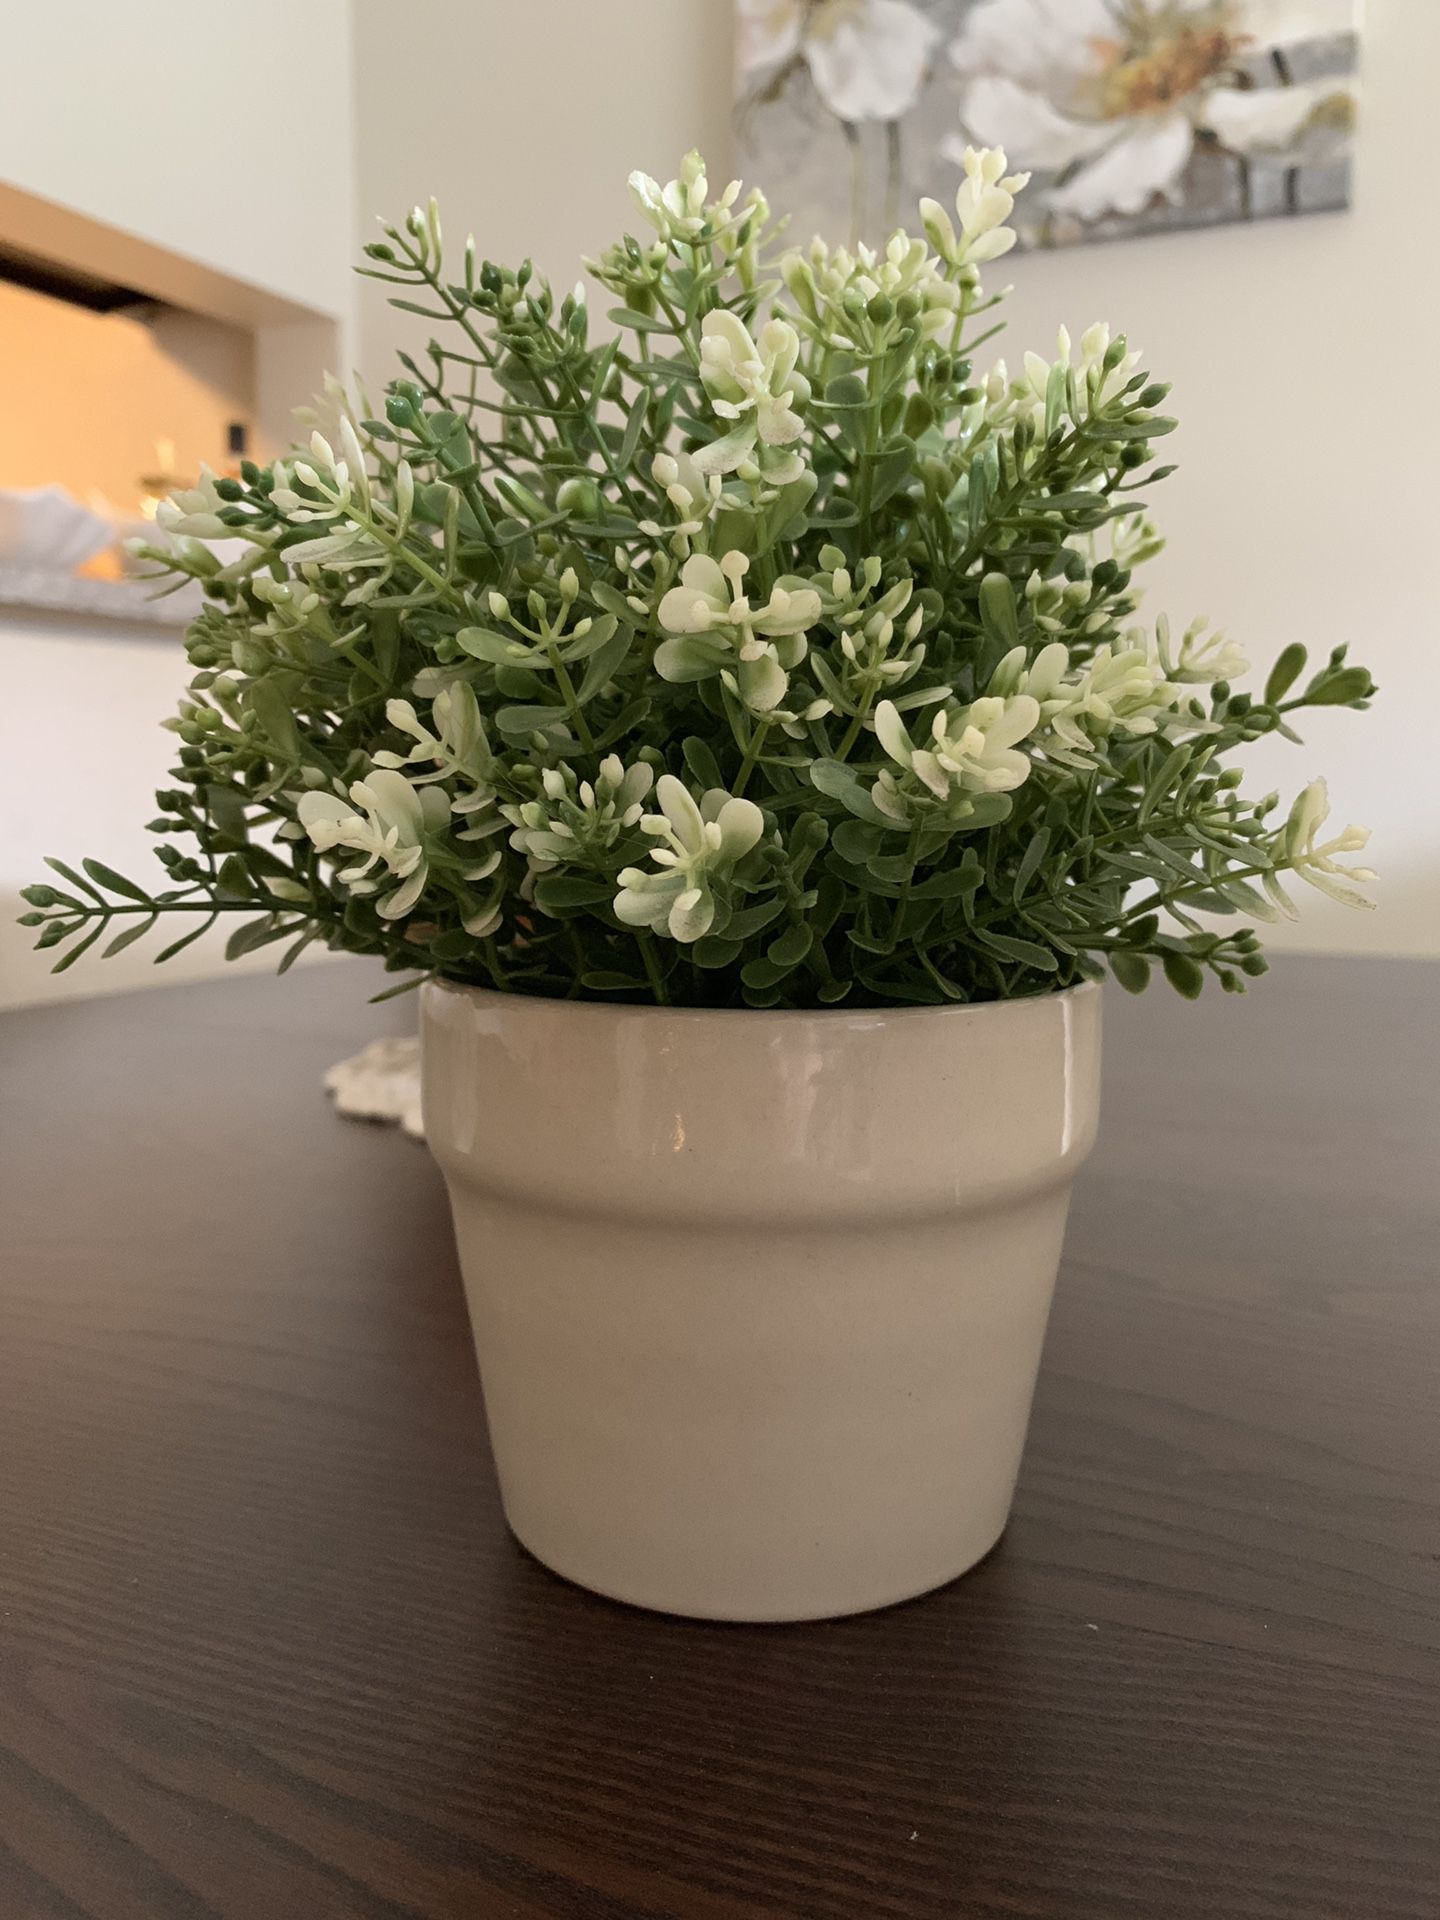 10x8 ikea artificial decoration plant with pot